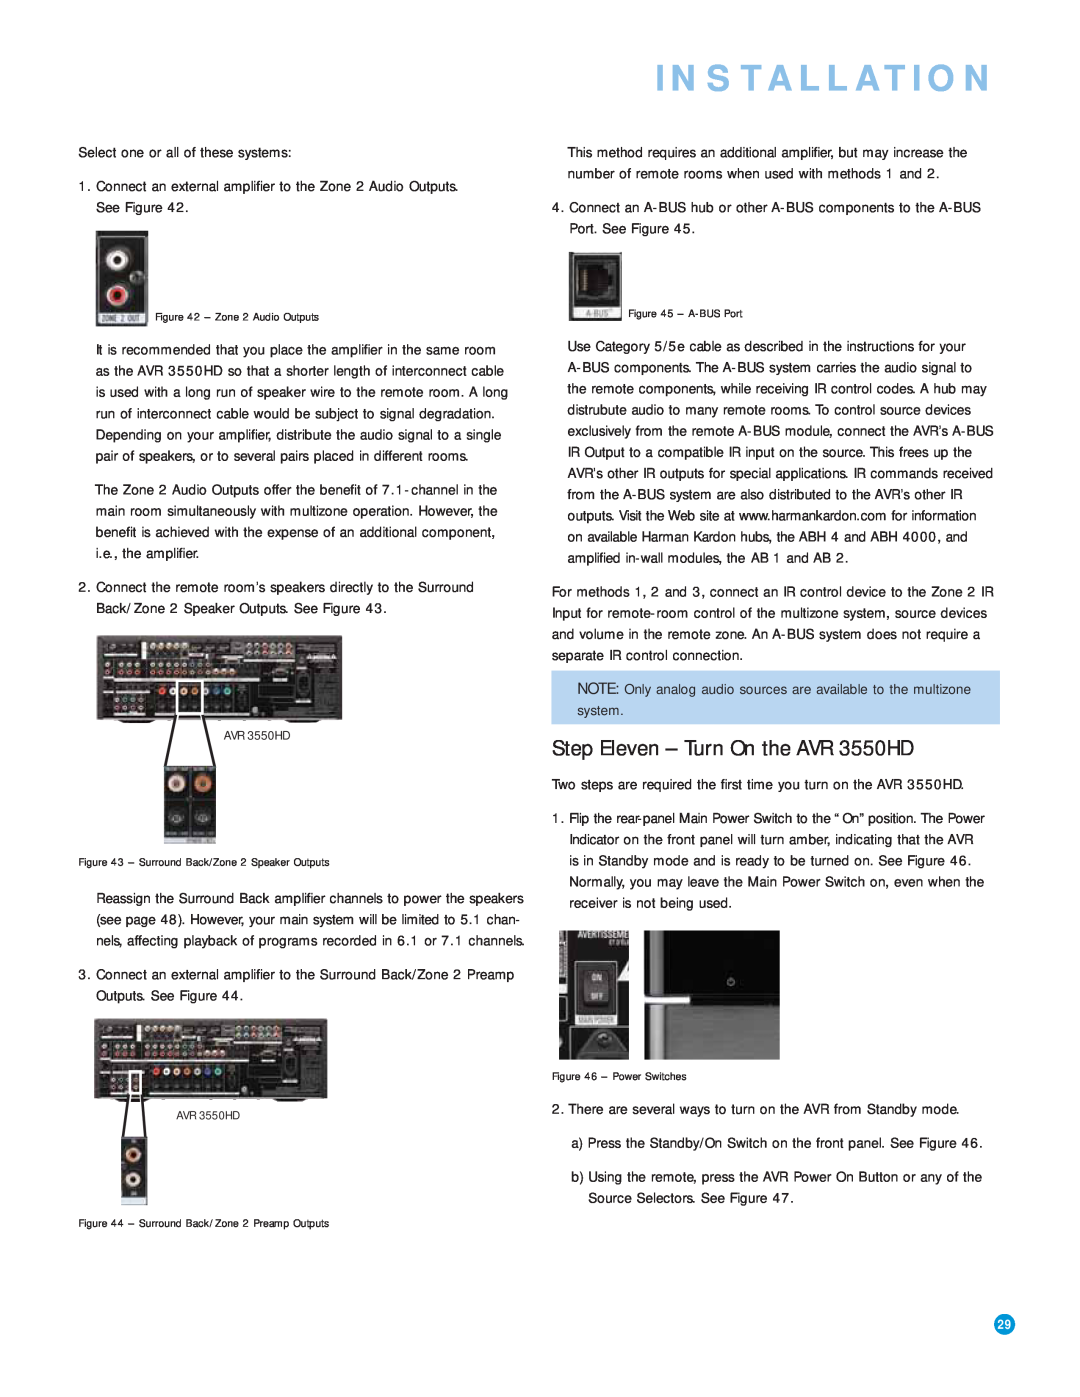 Harman-Kardon owner manual Step Eleven – Turn On the AVR 3550HD, Installation 